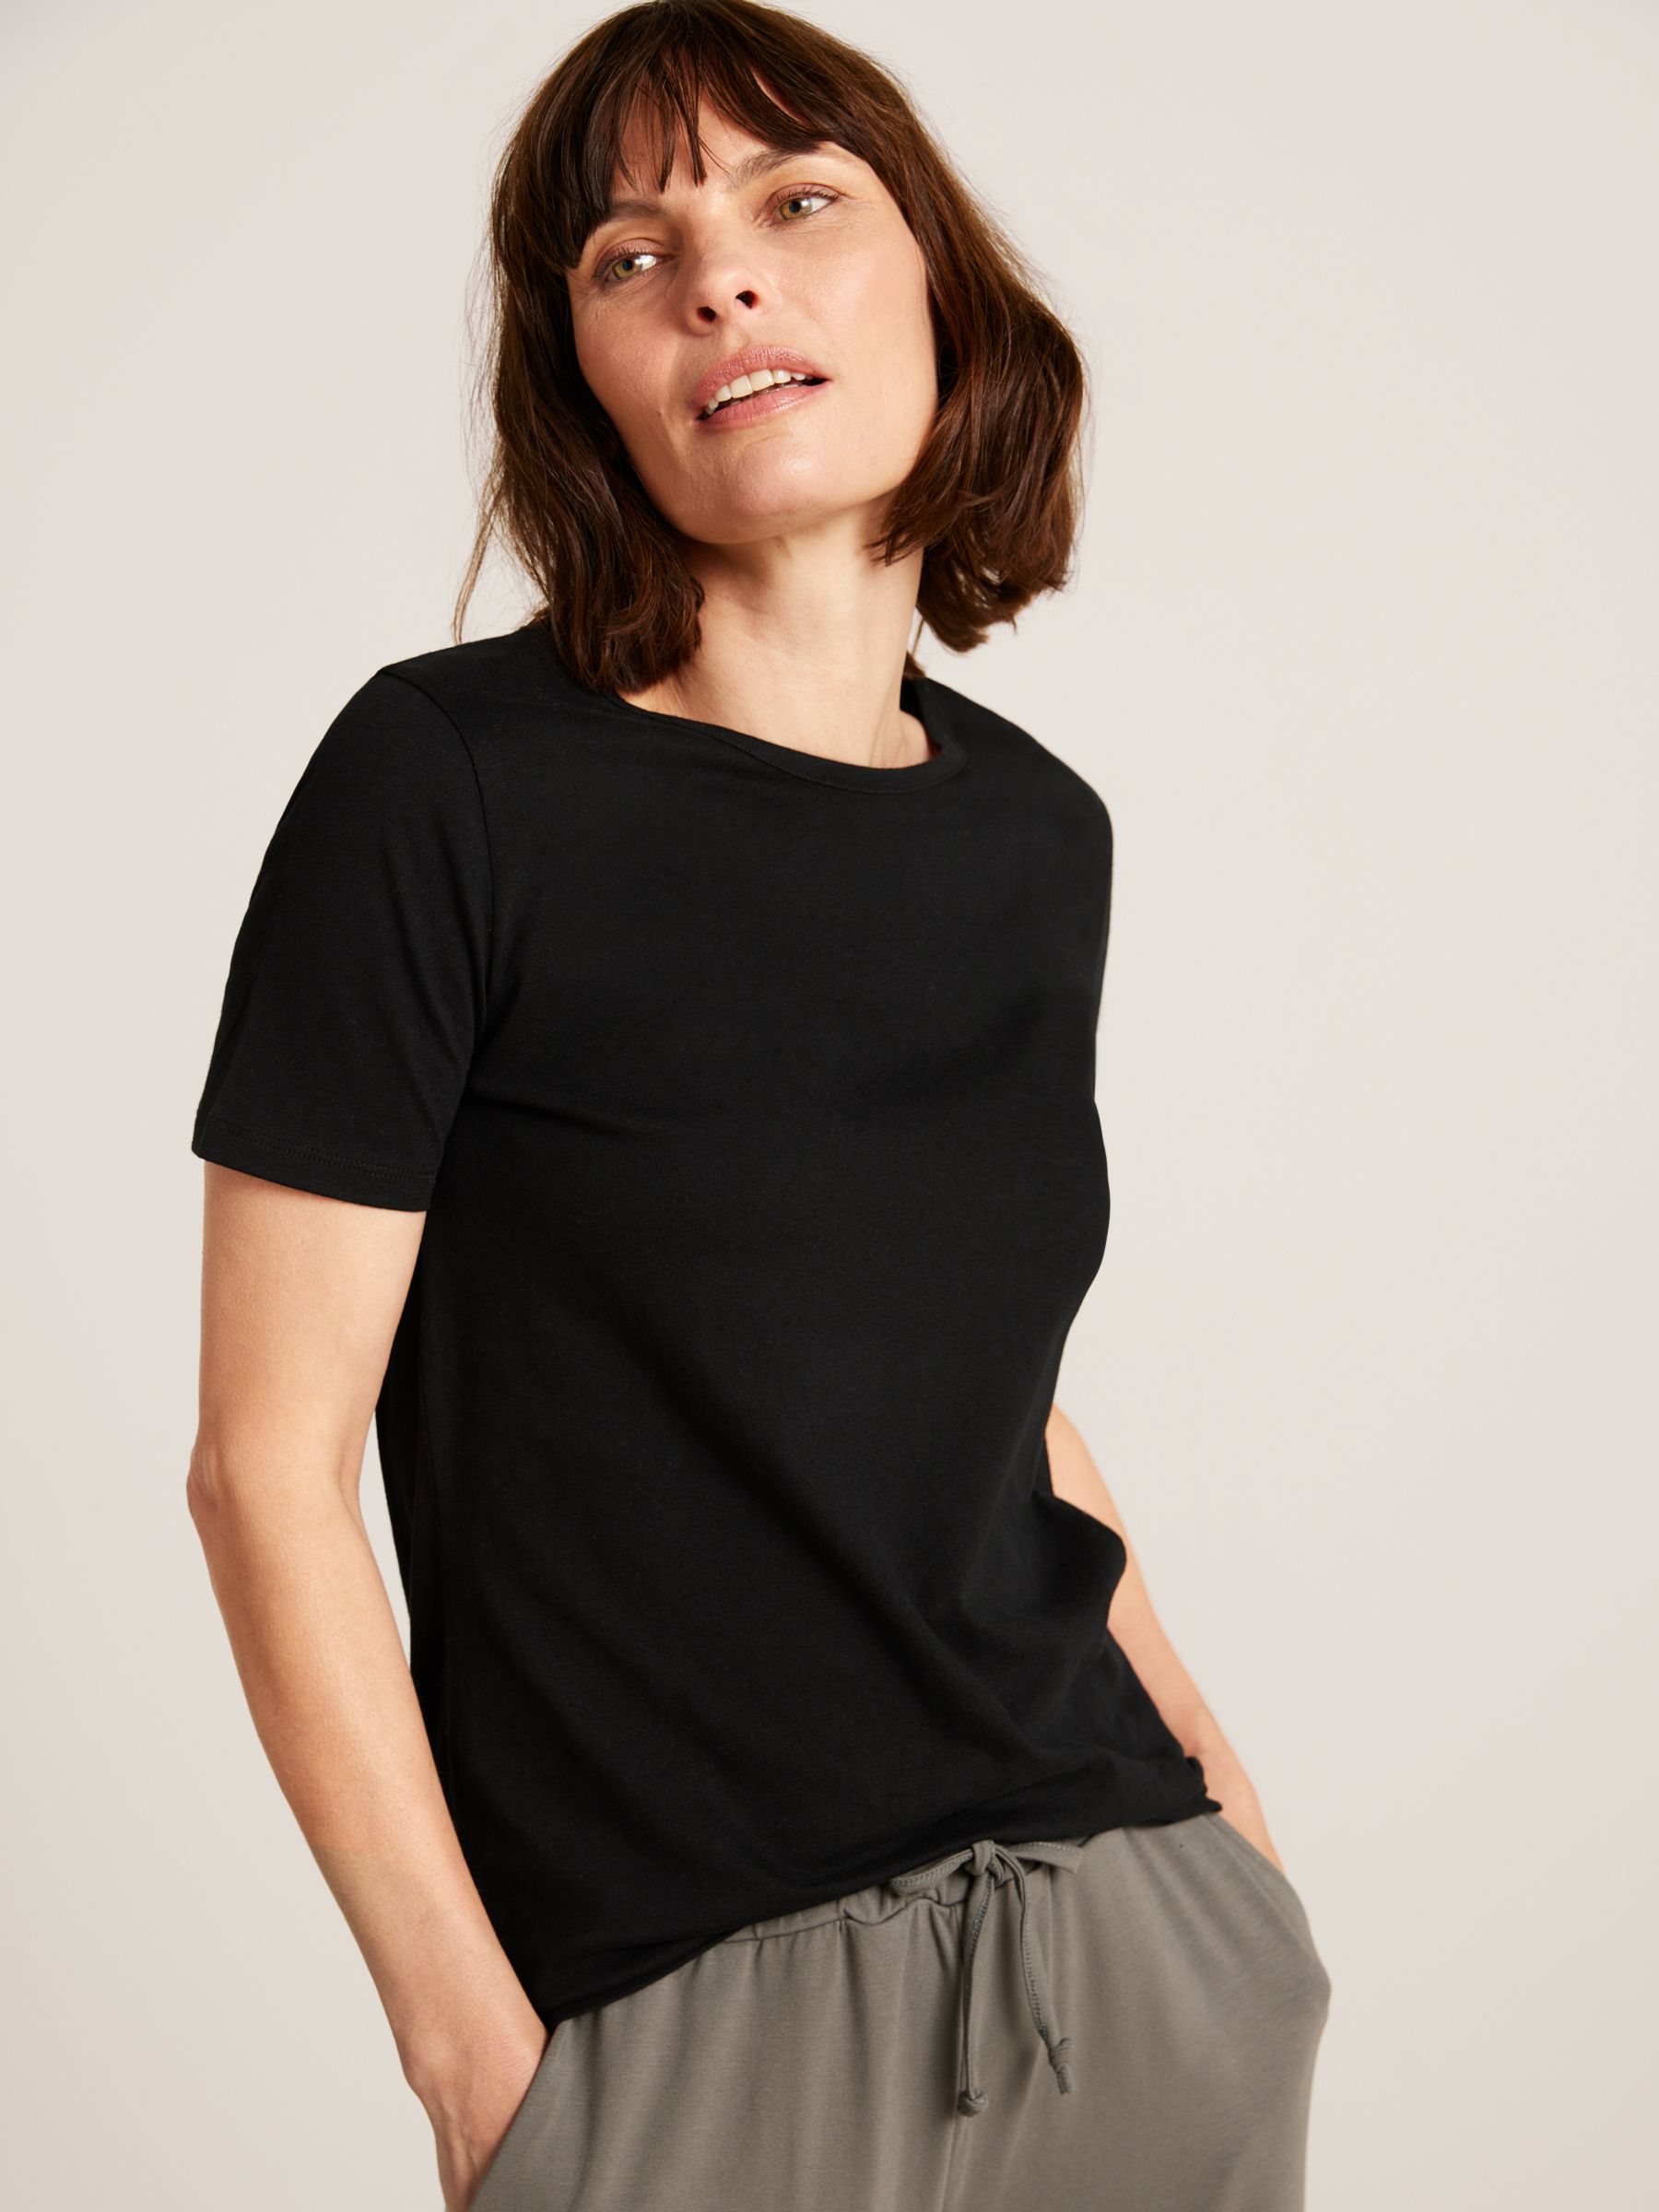 Multicolored L discount 83% WOMEN FASHION Shirts & T-shirts Sequin Desigual T-shirt 